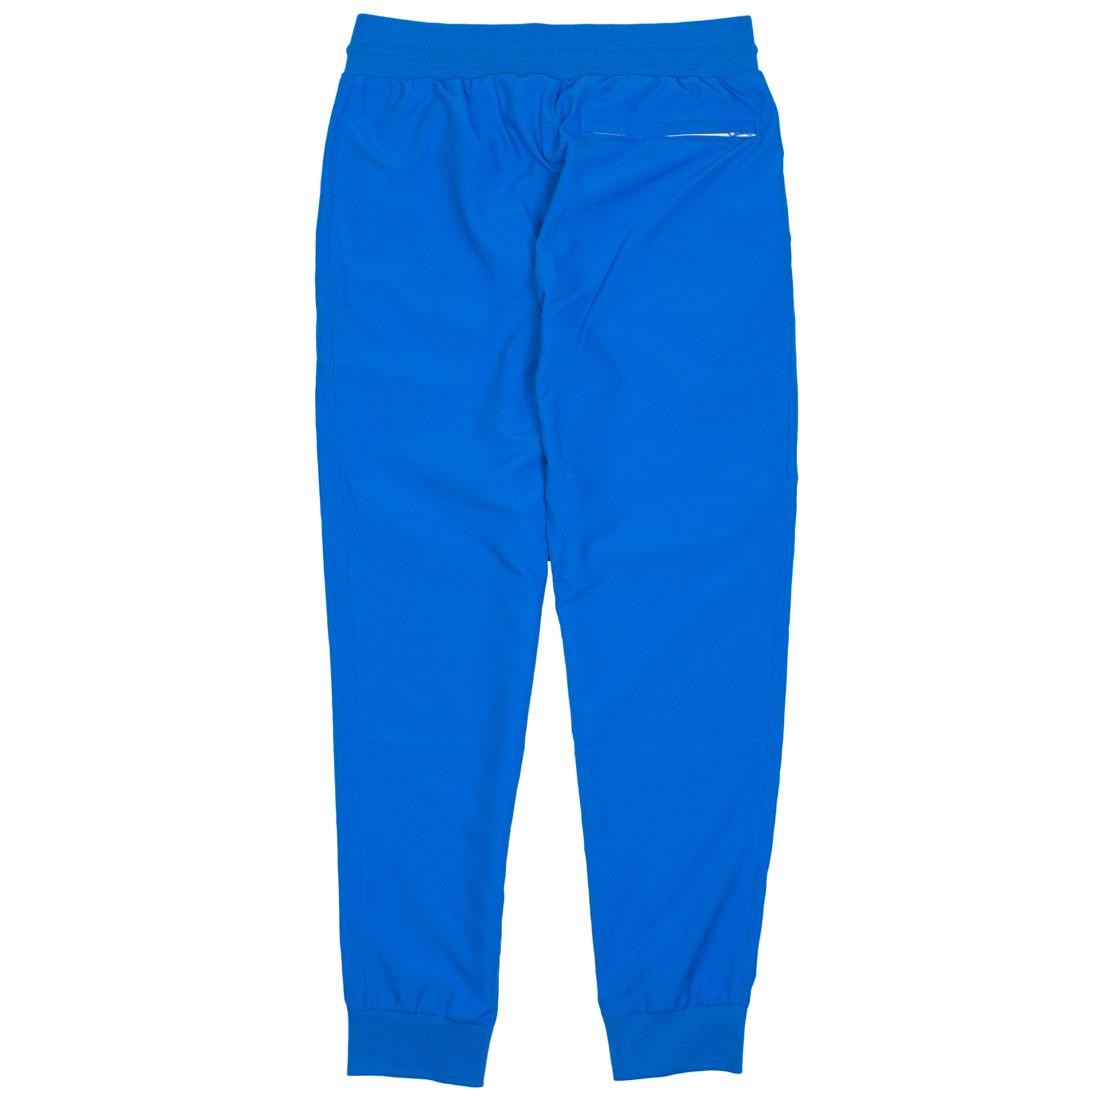 Adidas Men Cardle Track Pants (blue / bluebird)